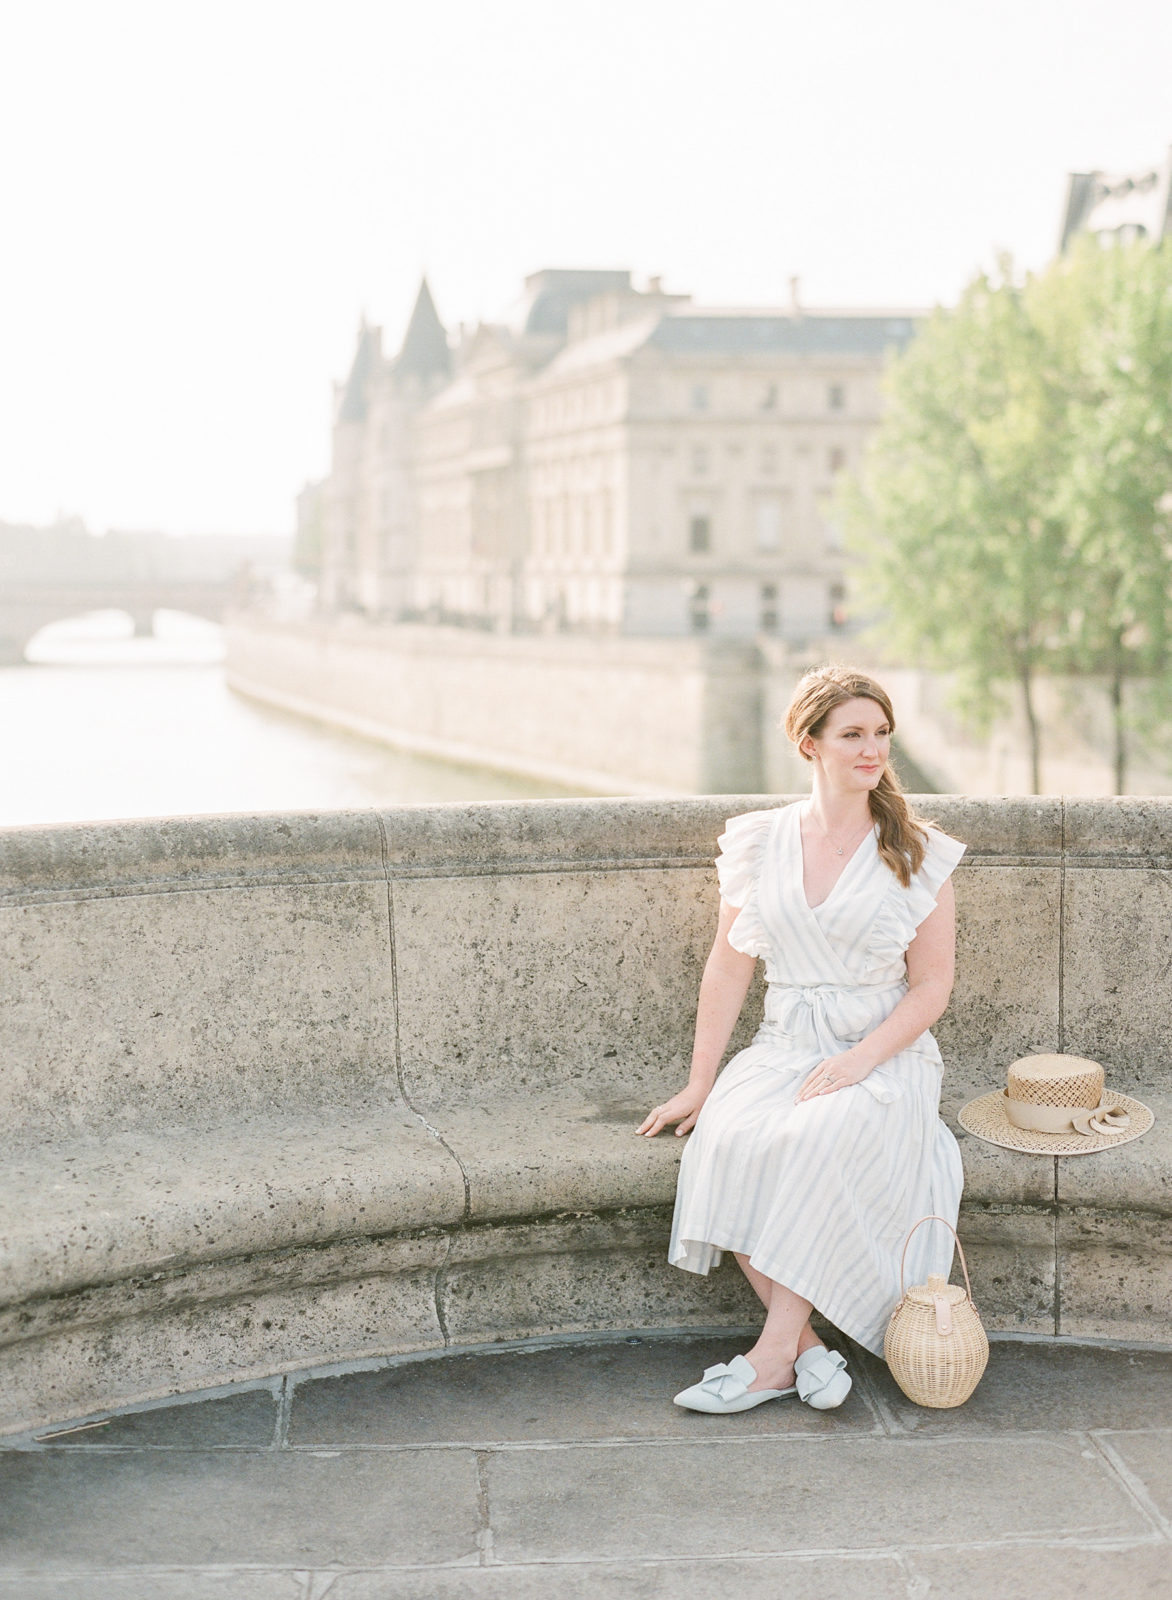 Paris branding photographer | Paris portrait photographer | Paris brand photos | Petite Abeille Design | Molly Carr Photography | Pont Neuf | Seine Sunrset | Paris Bridge | Pont Neuf Photoshoot | Girl in Paris | Girl Sitting on Seine